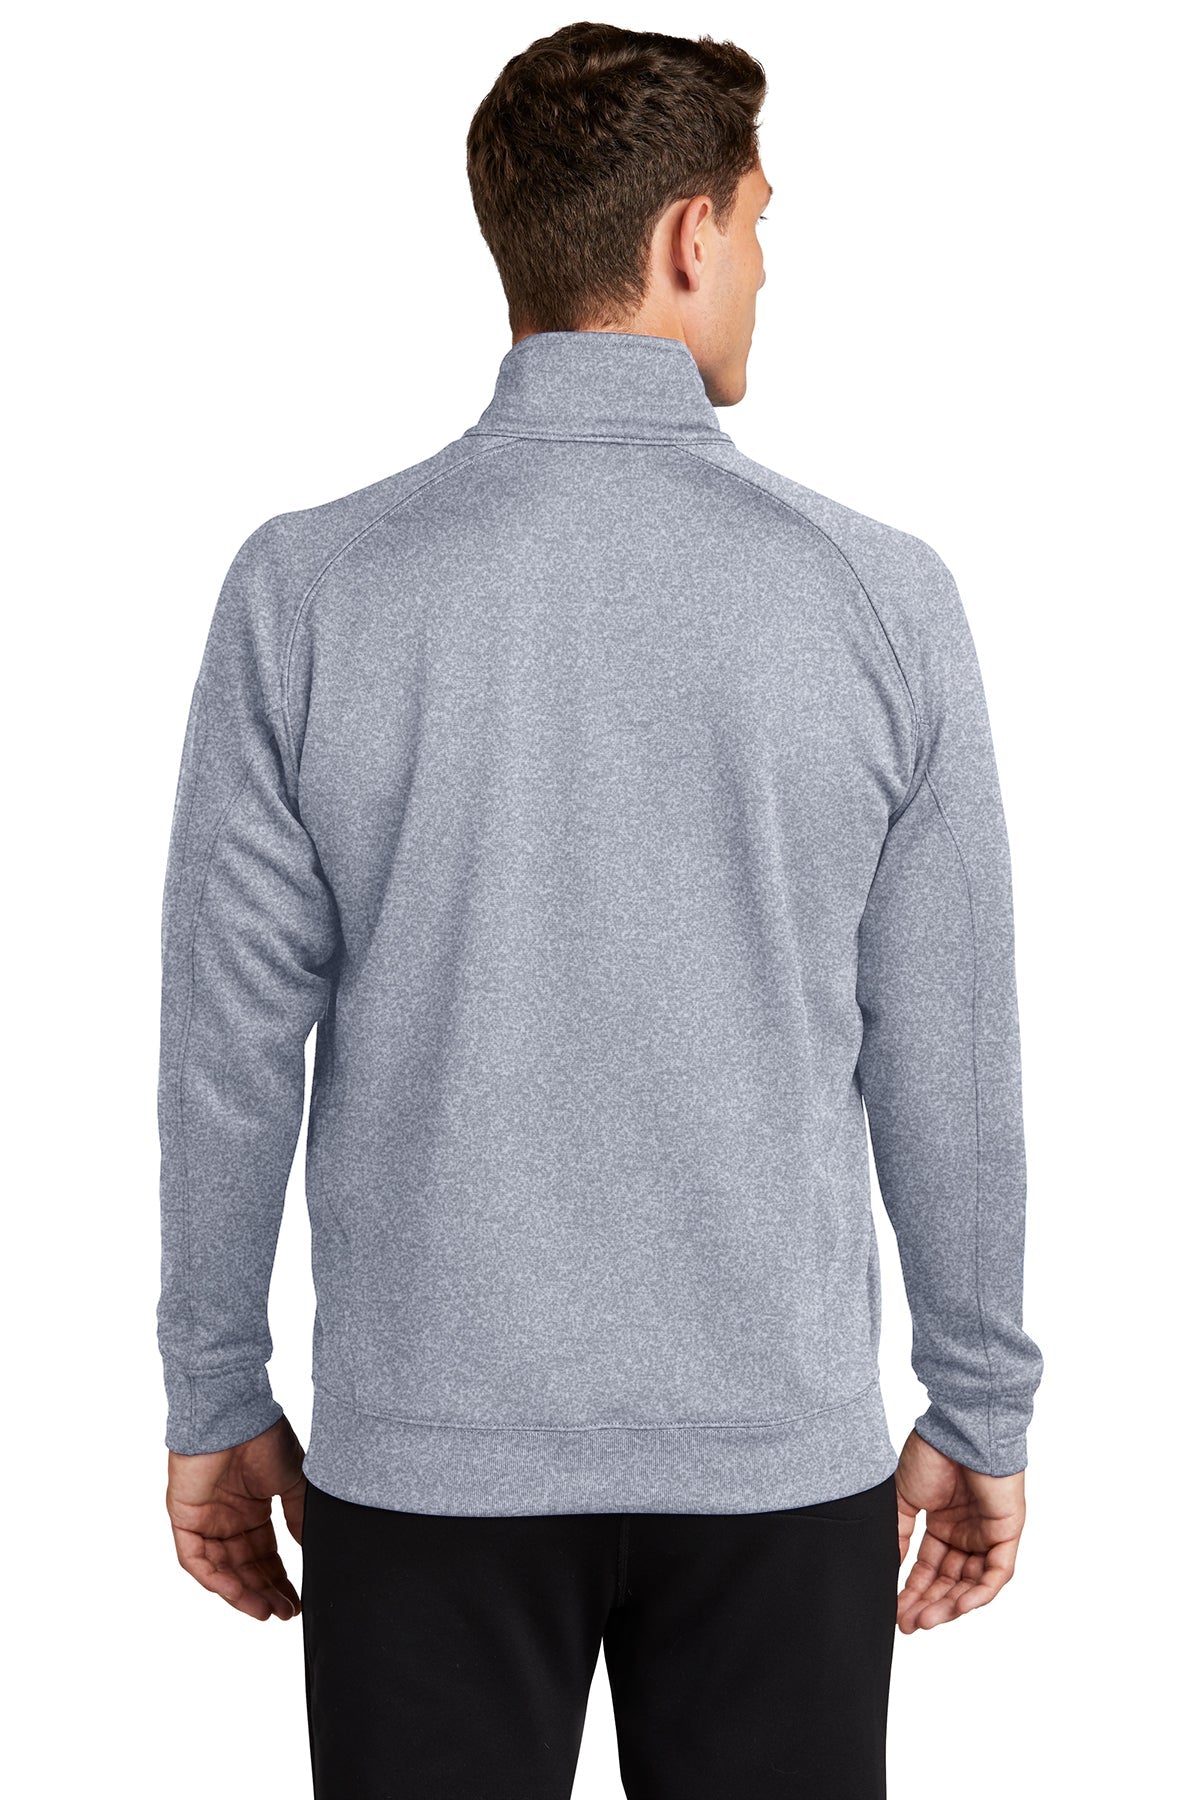 sport-tek_f247 _grey heather_company_logo_sweatshirts